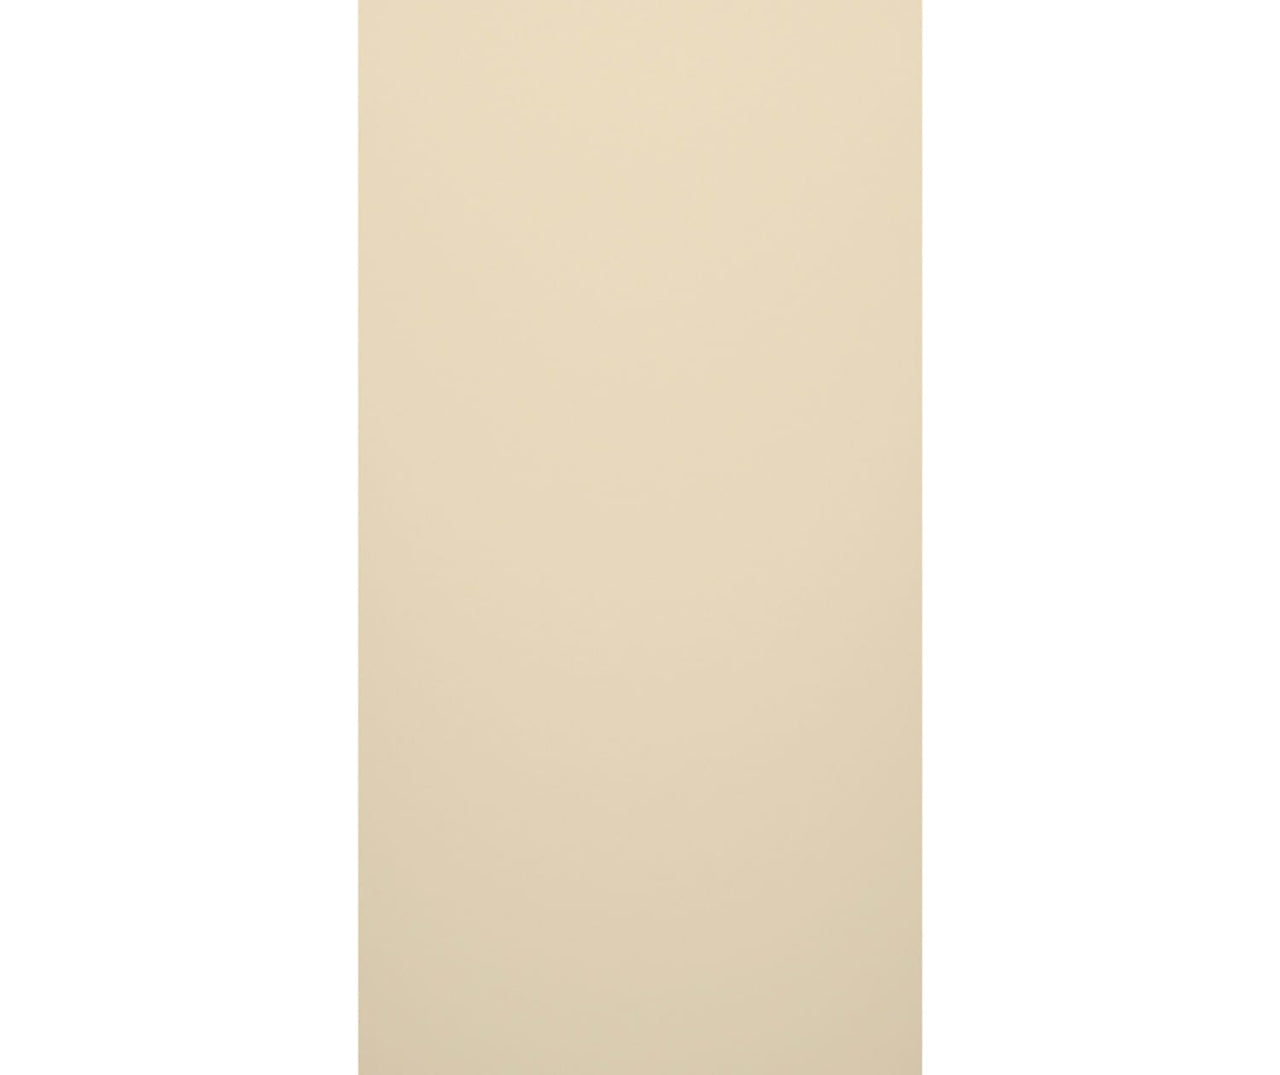 SMMK-7238-1 38 x 72 Swanstone Smooth Tile Glue up Bathtub and Shower Single Wall Panel  - BNGBath